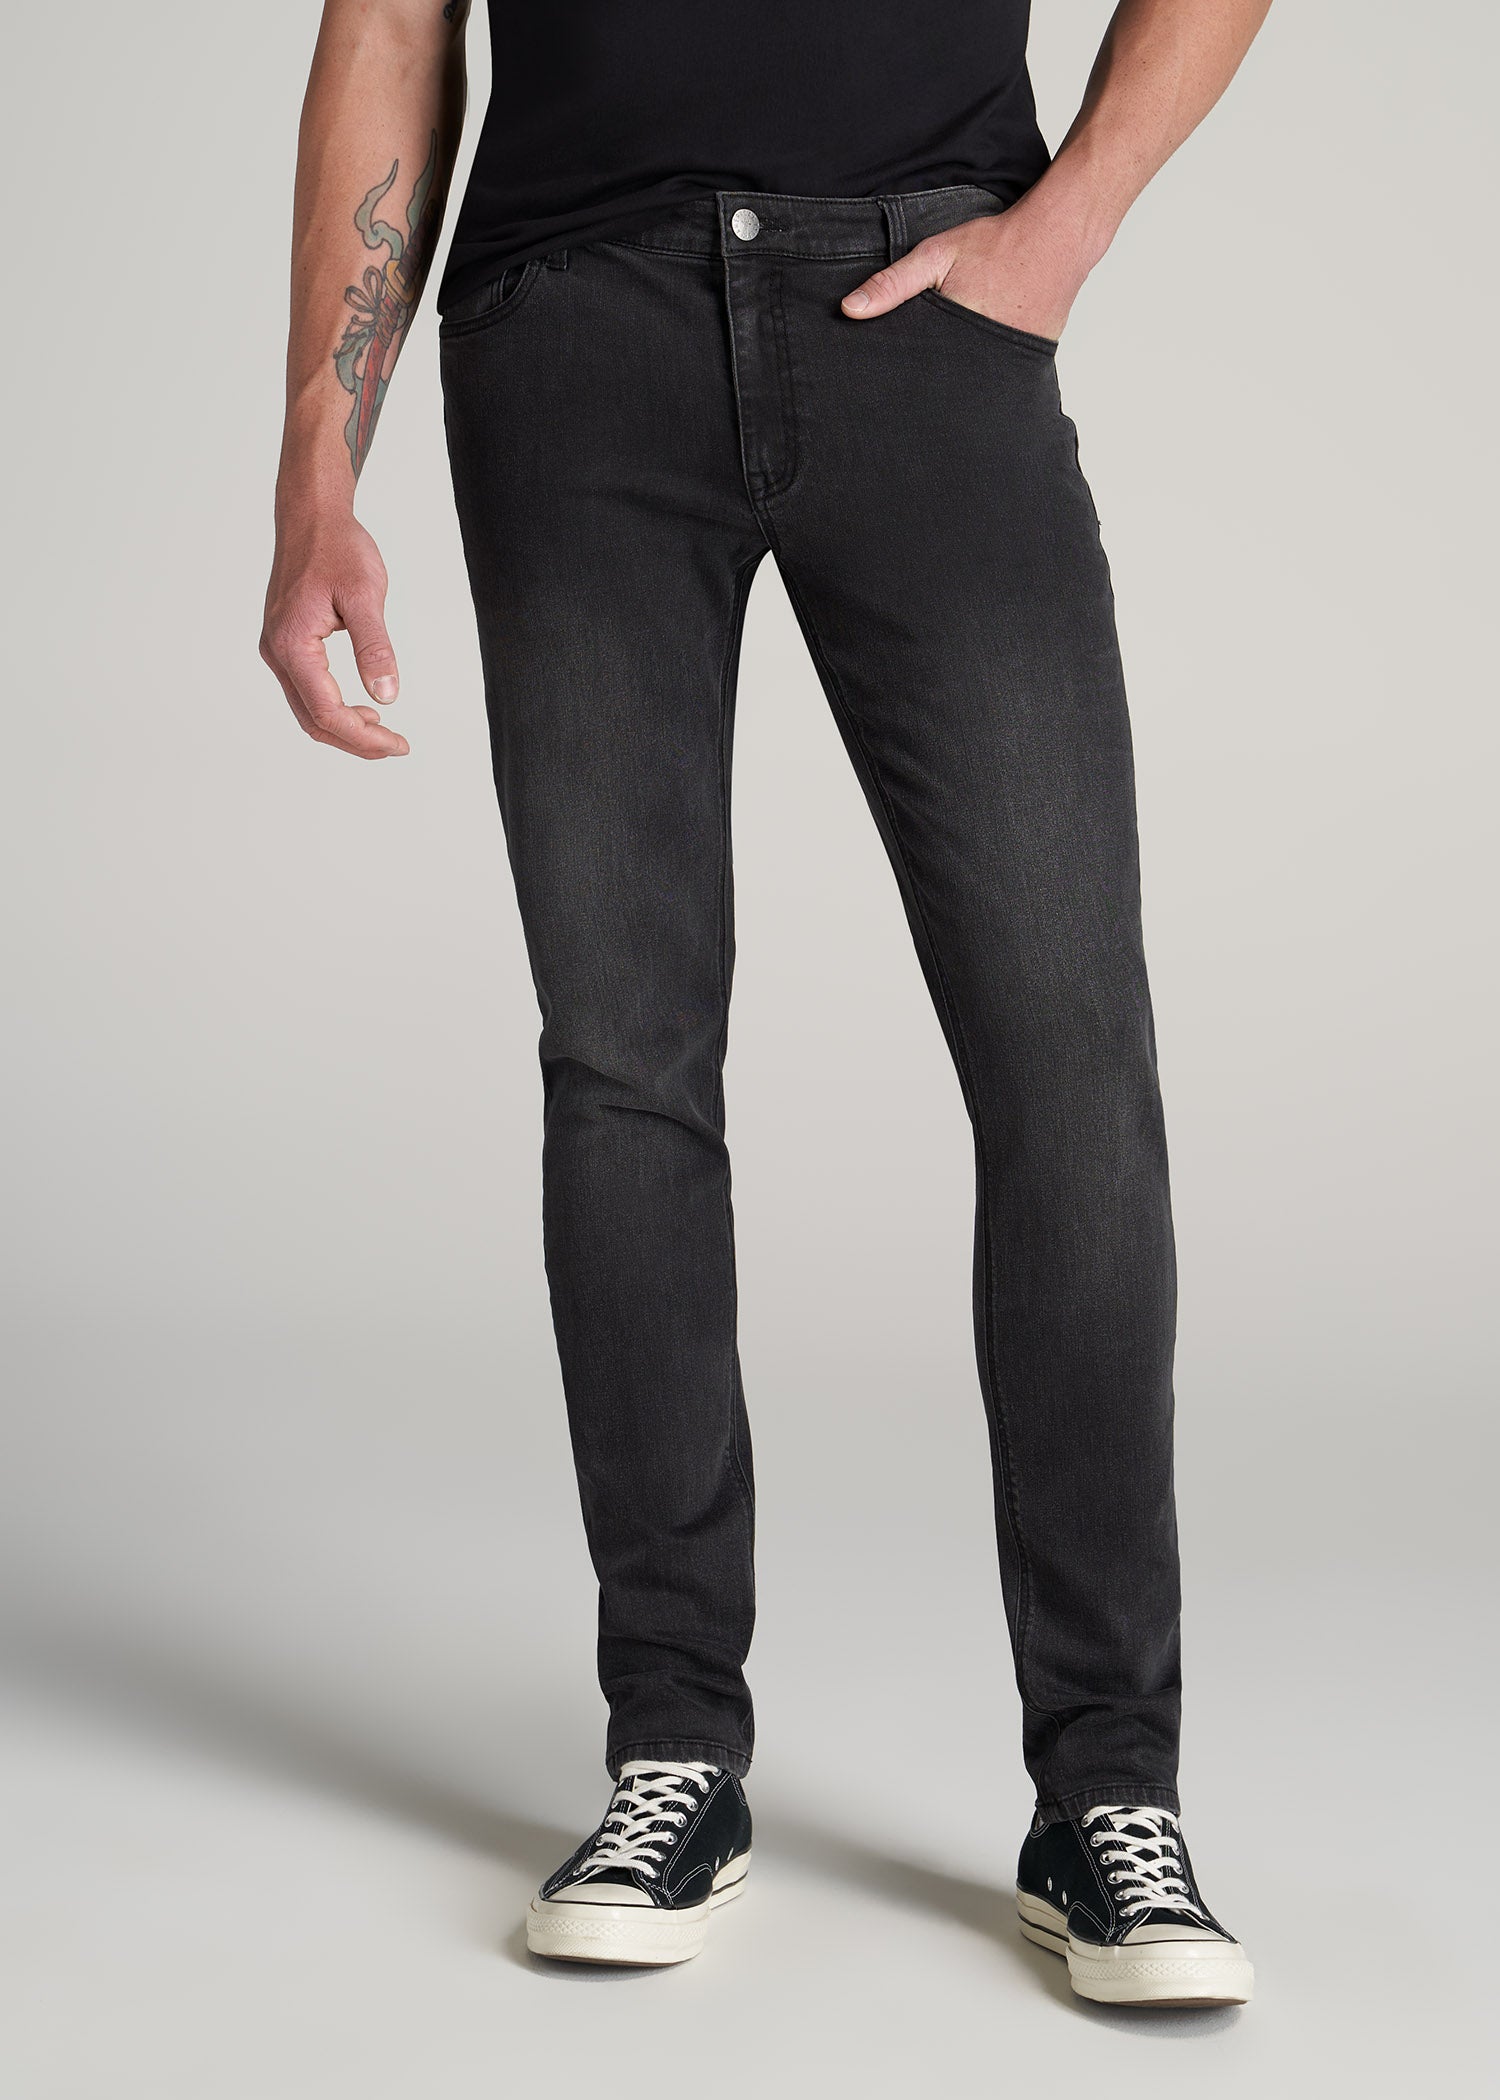 Men's Skinny Jeans: Shop Skinny Jeans for Men